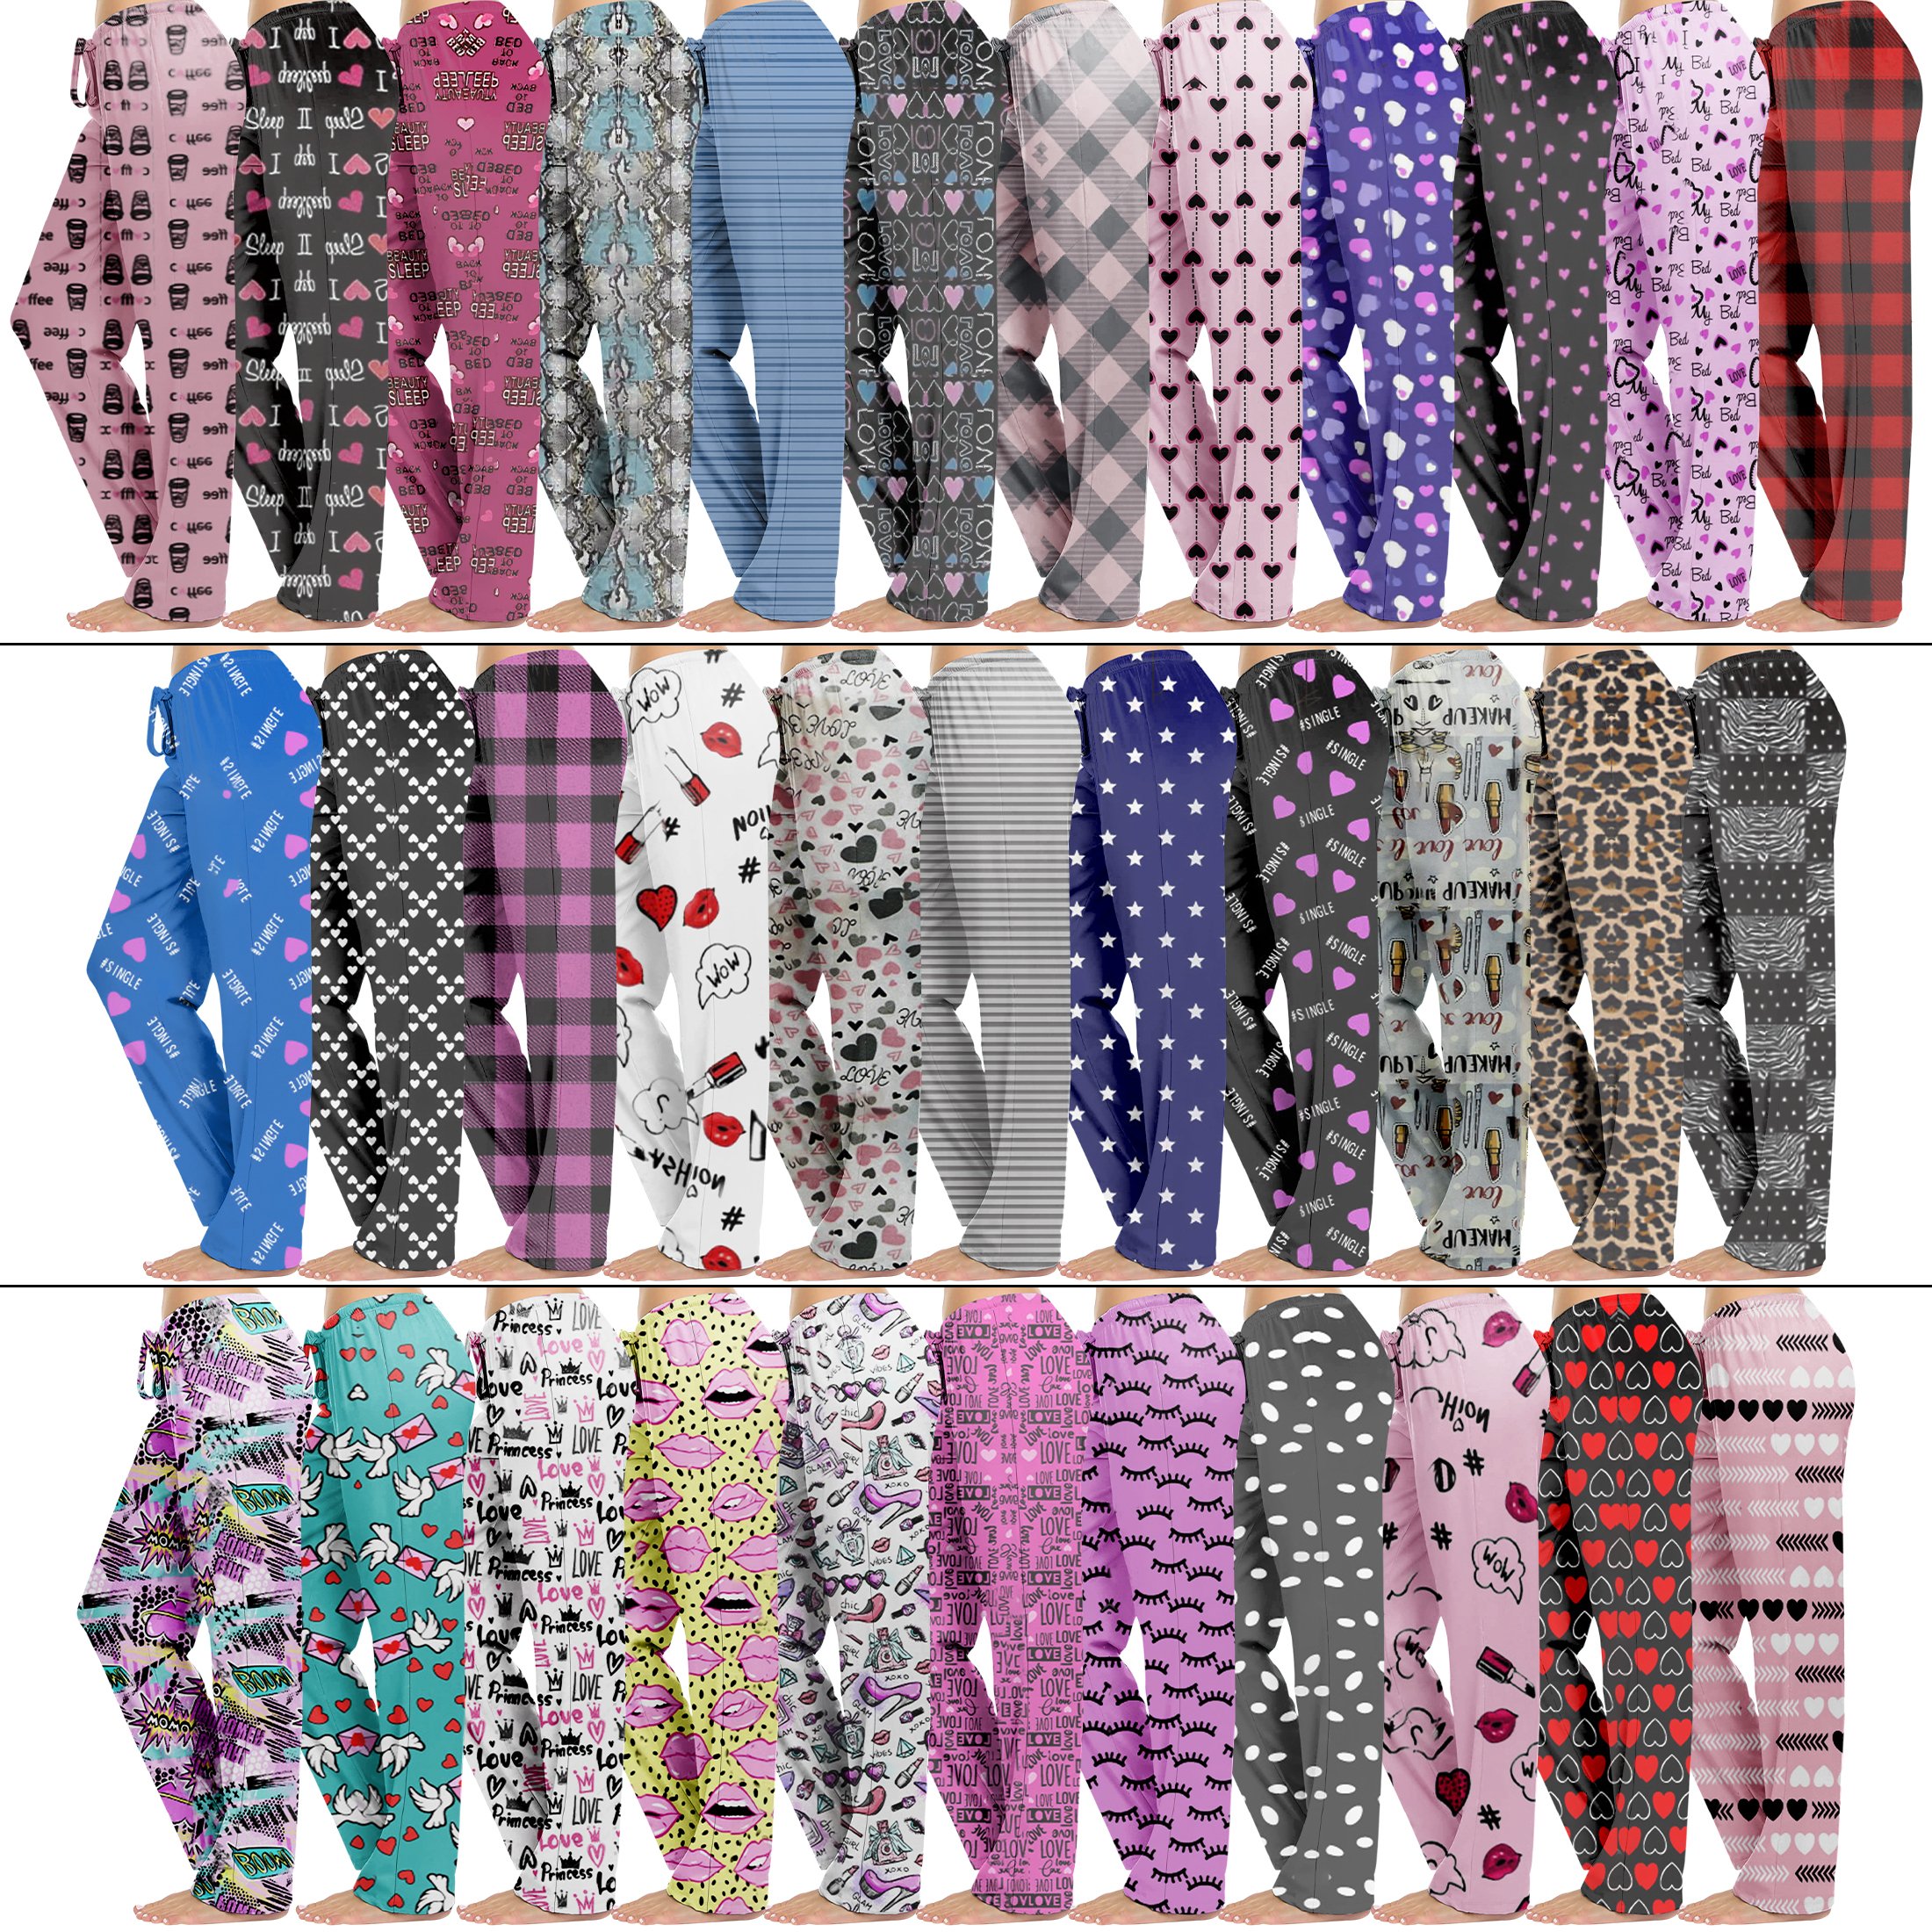 3-Pack: Women's Comfy Printed Lounge Pajama Pants For Sleepwear - Large